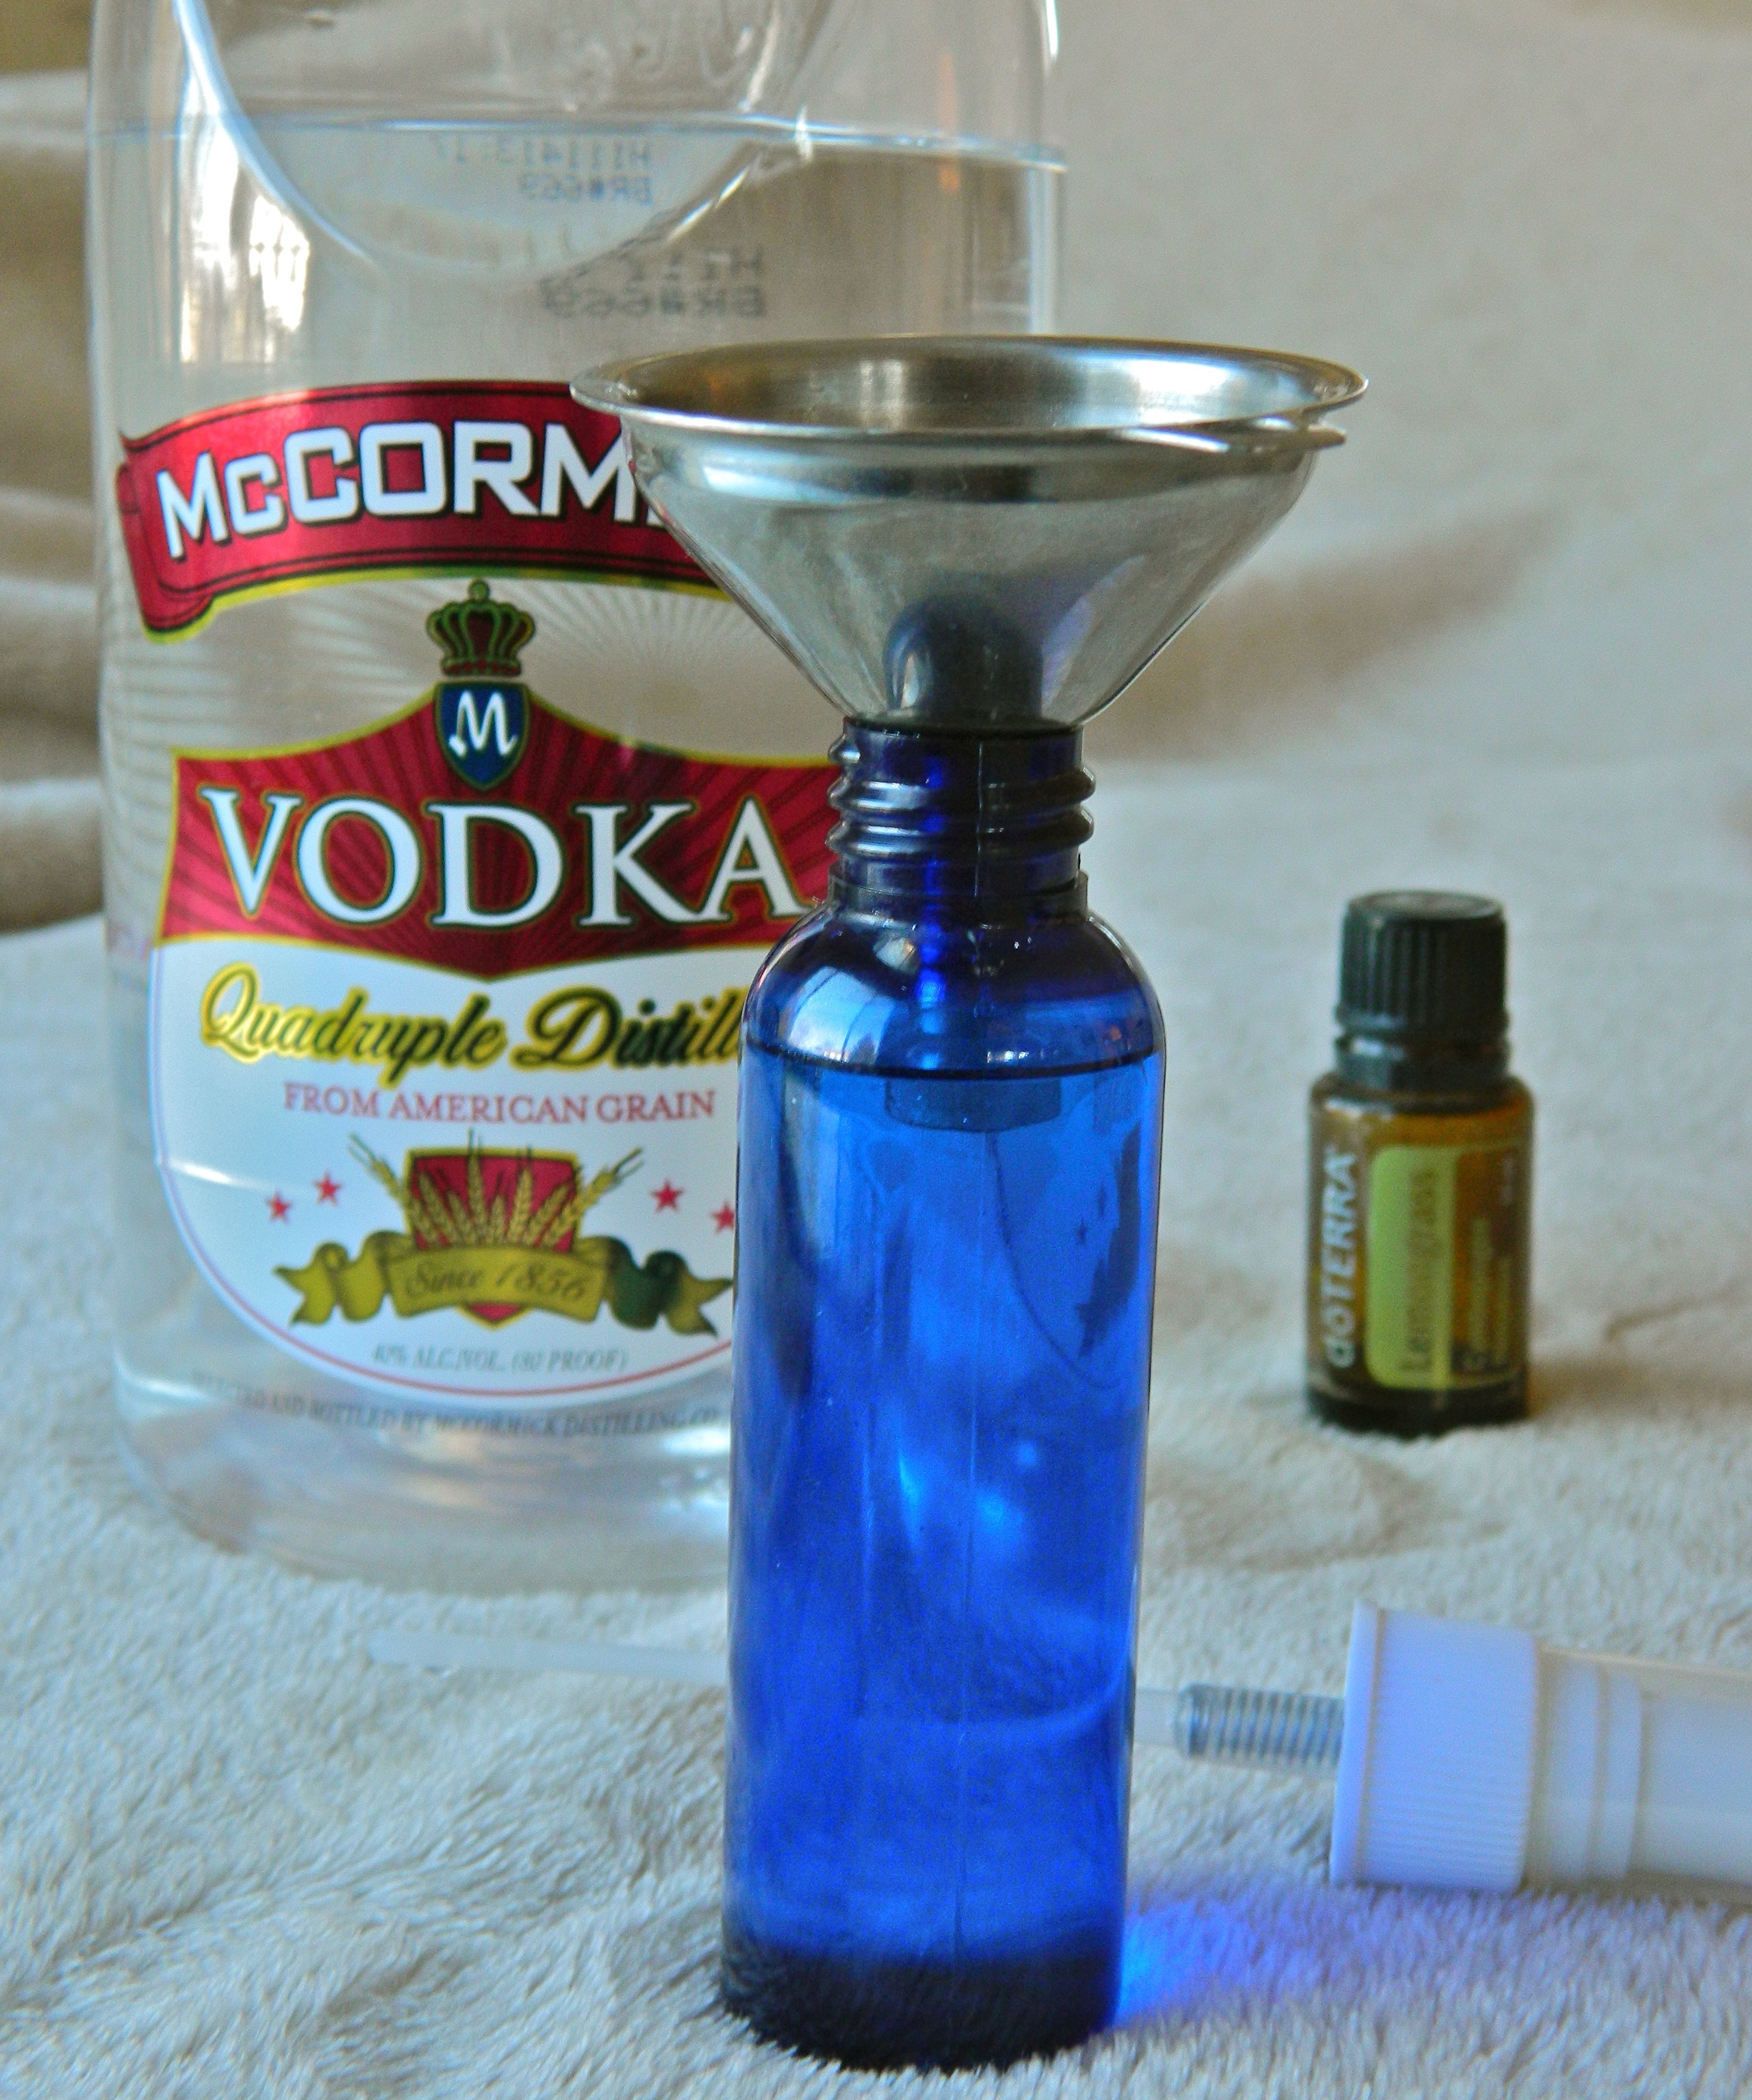 Vodka deodorant